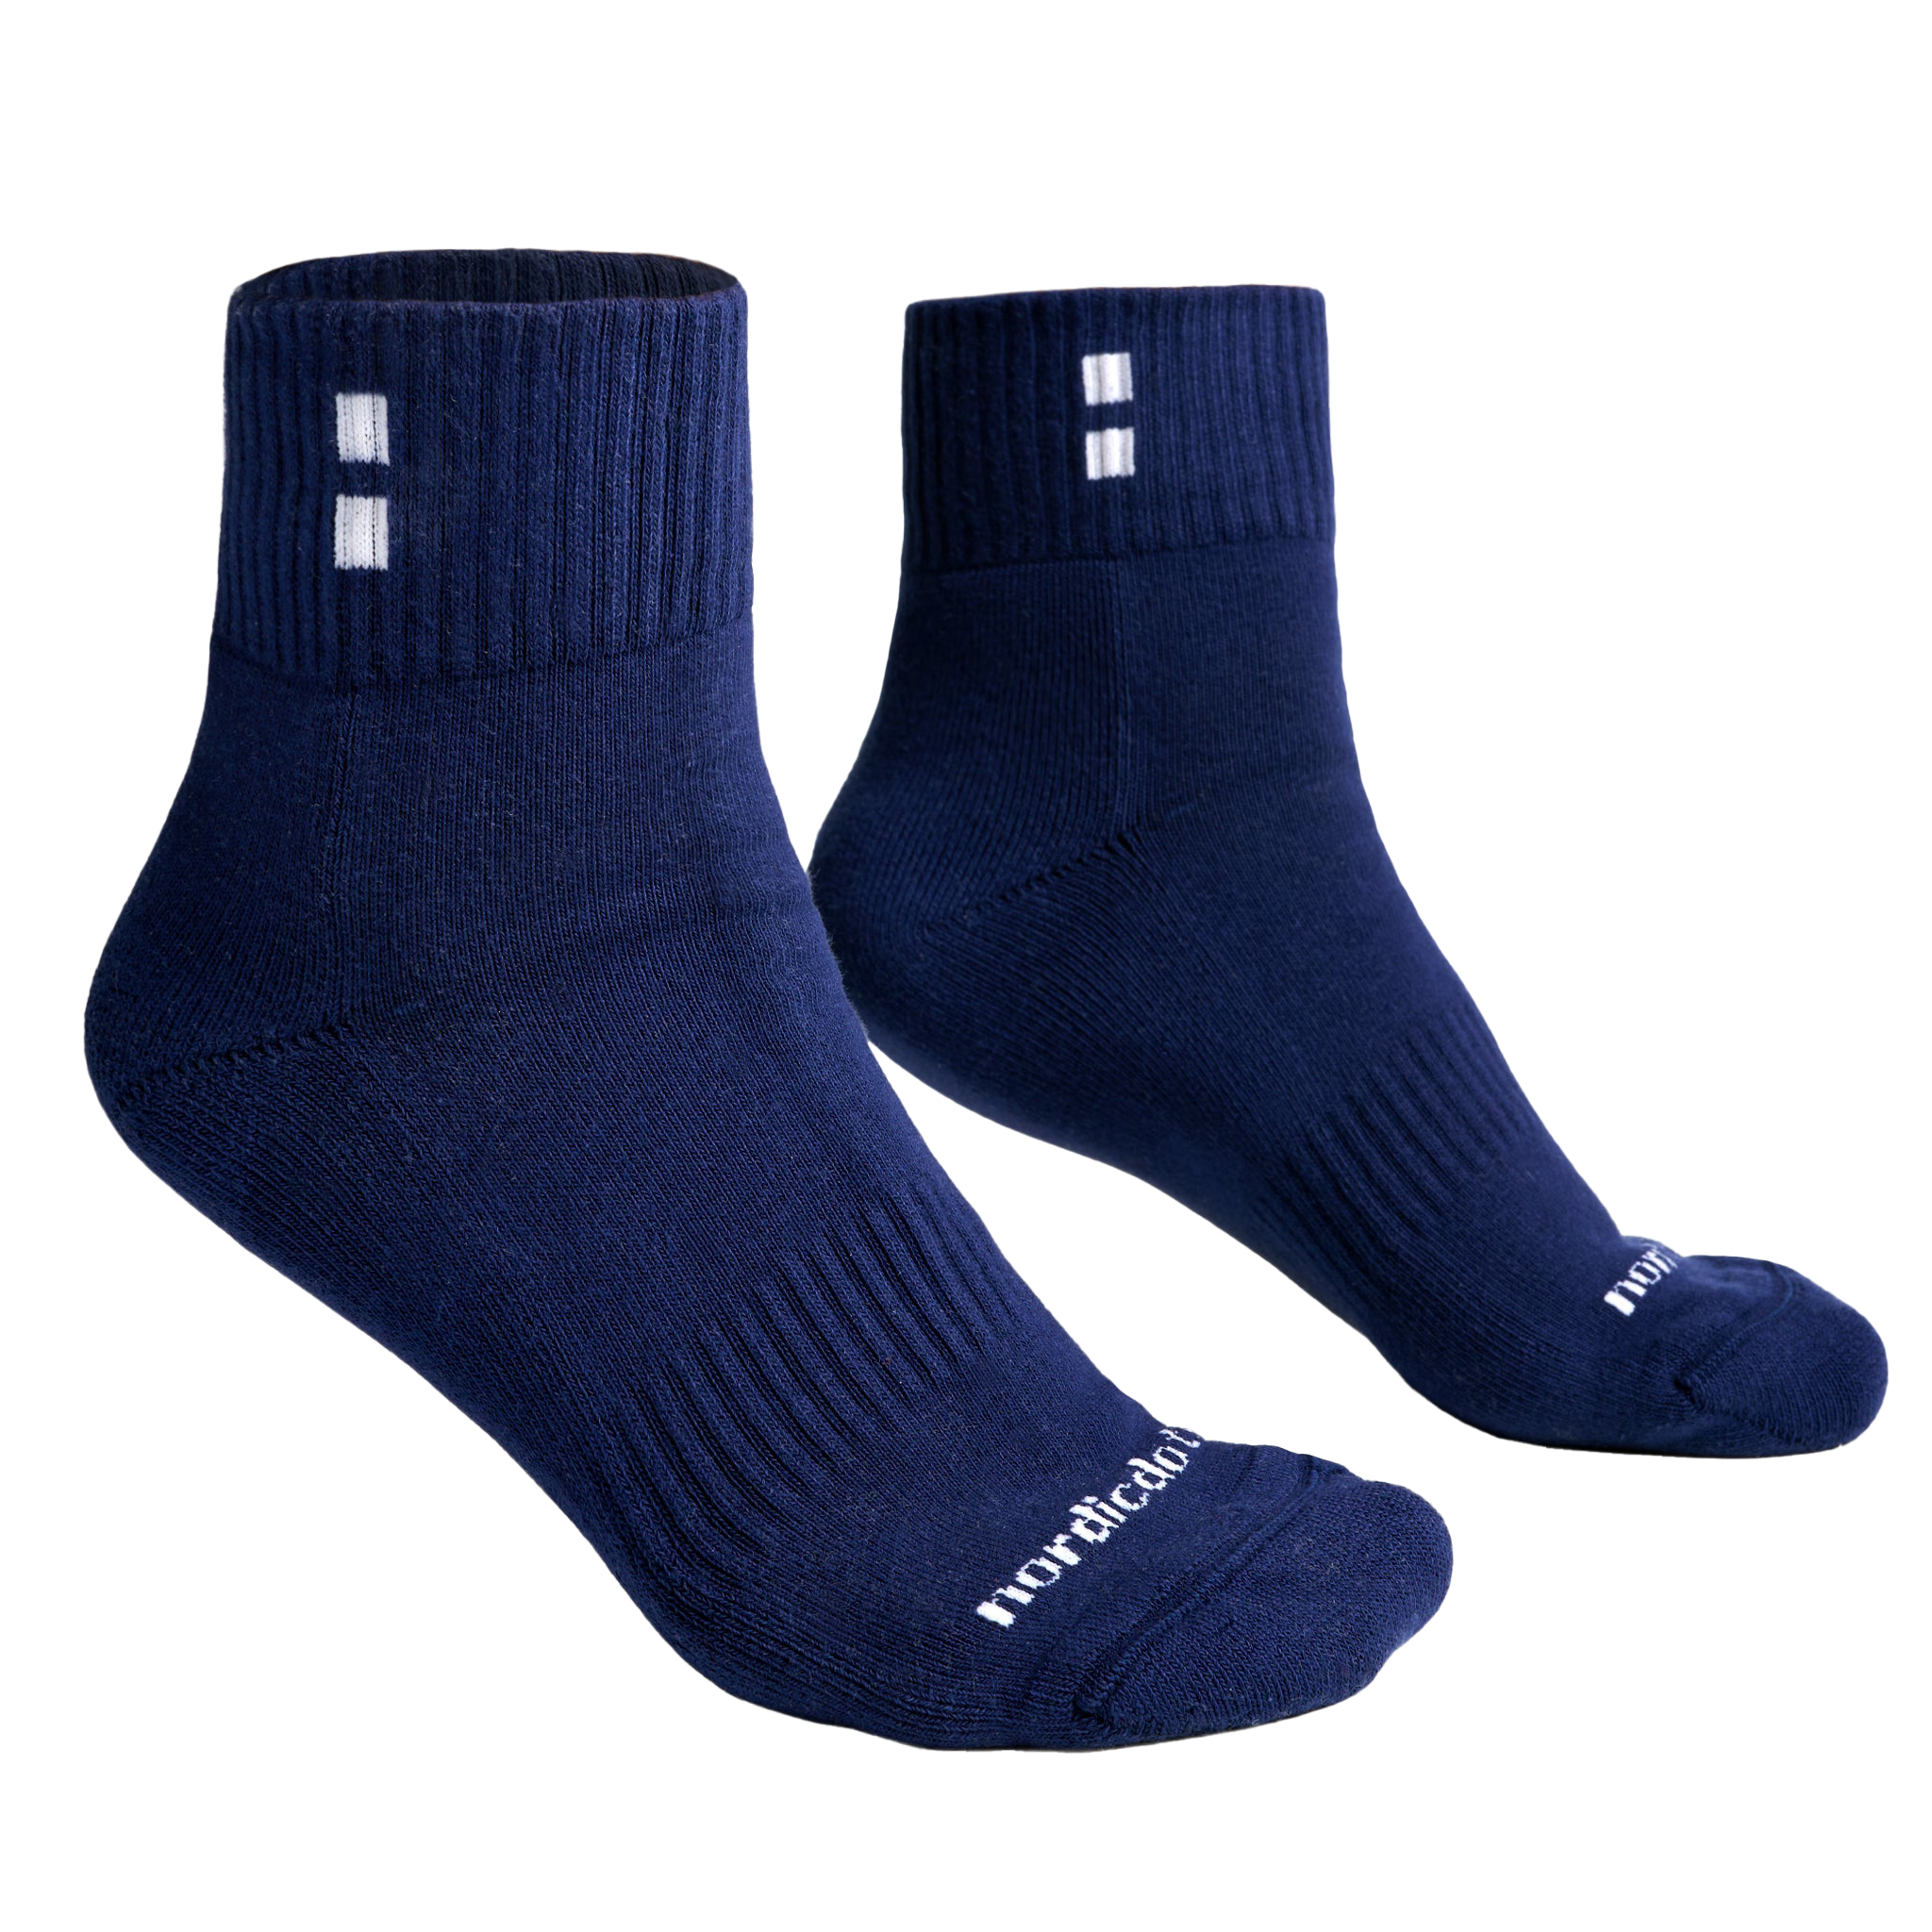 nordicdots Performance Socks 2 Pack - Navy